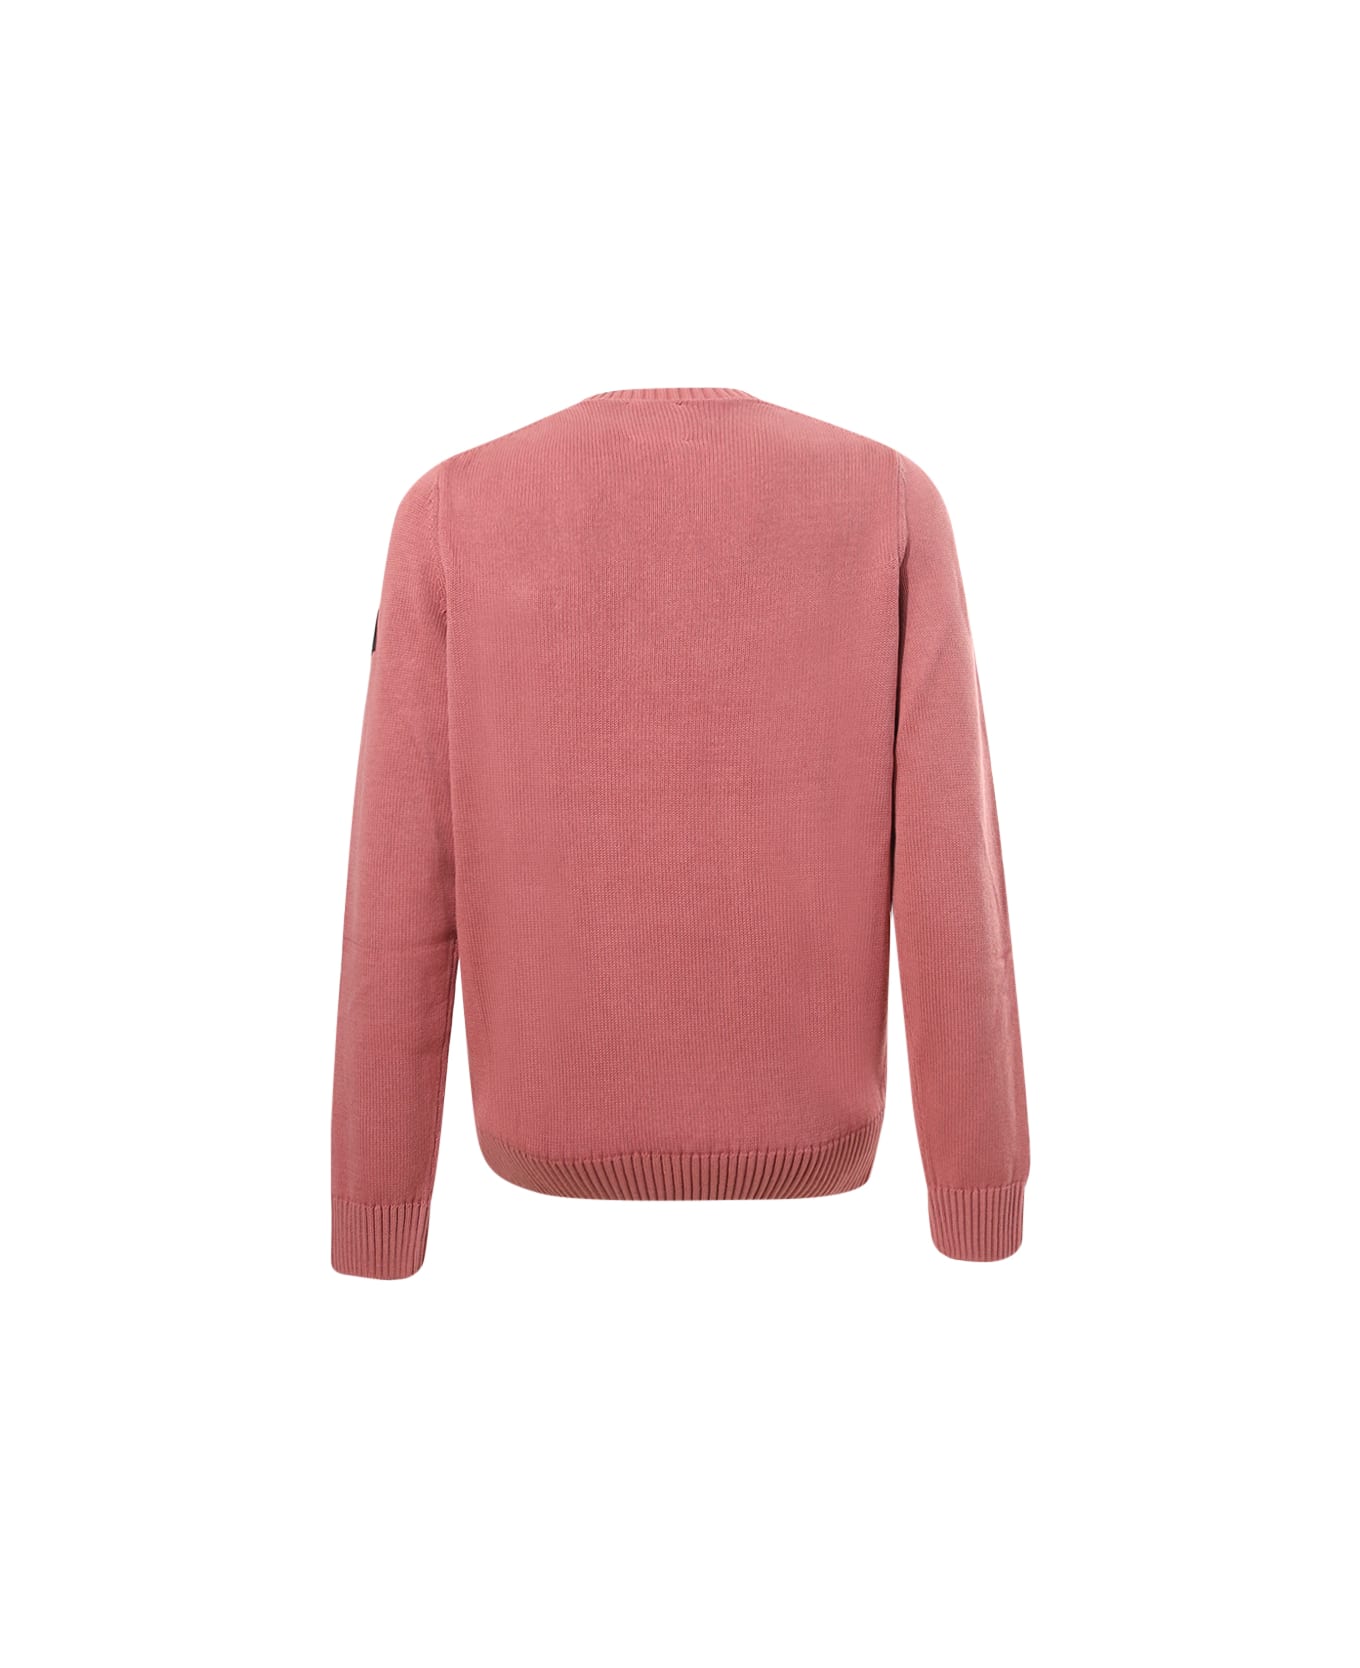 Ecoalf Sweater - Pink ニットウェア